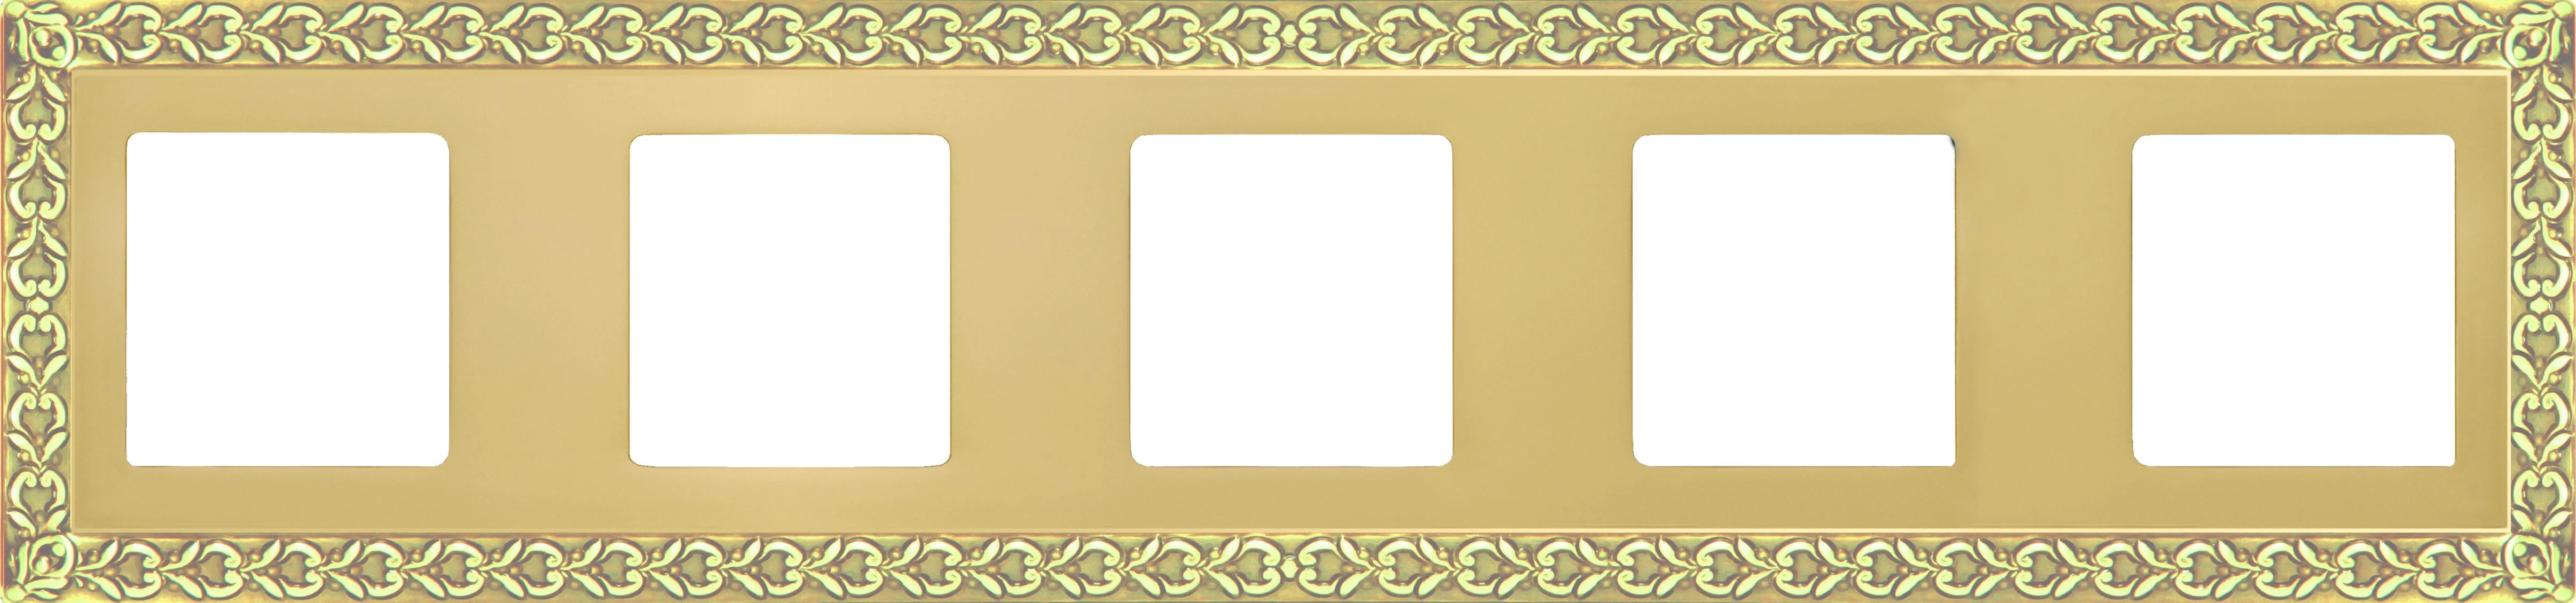  артикул FD01225OB название Рамка 5-ая (пятерная), цвет Светлое золото, San Sebastian, Fede